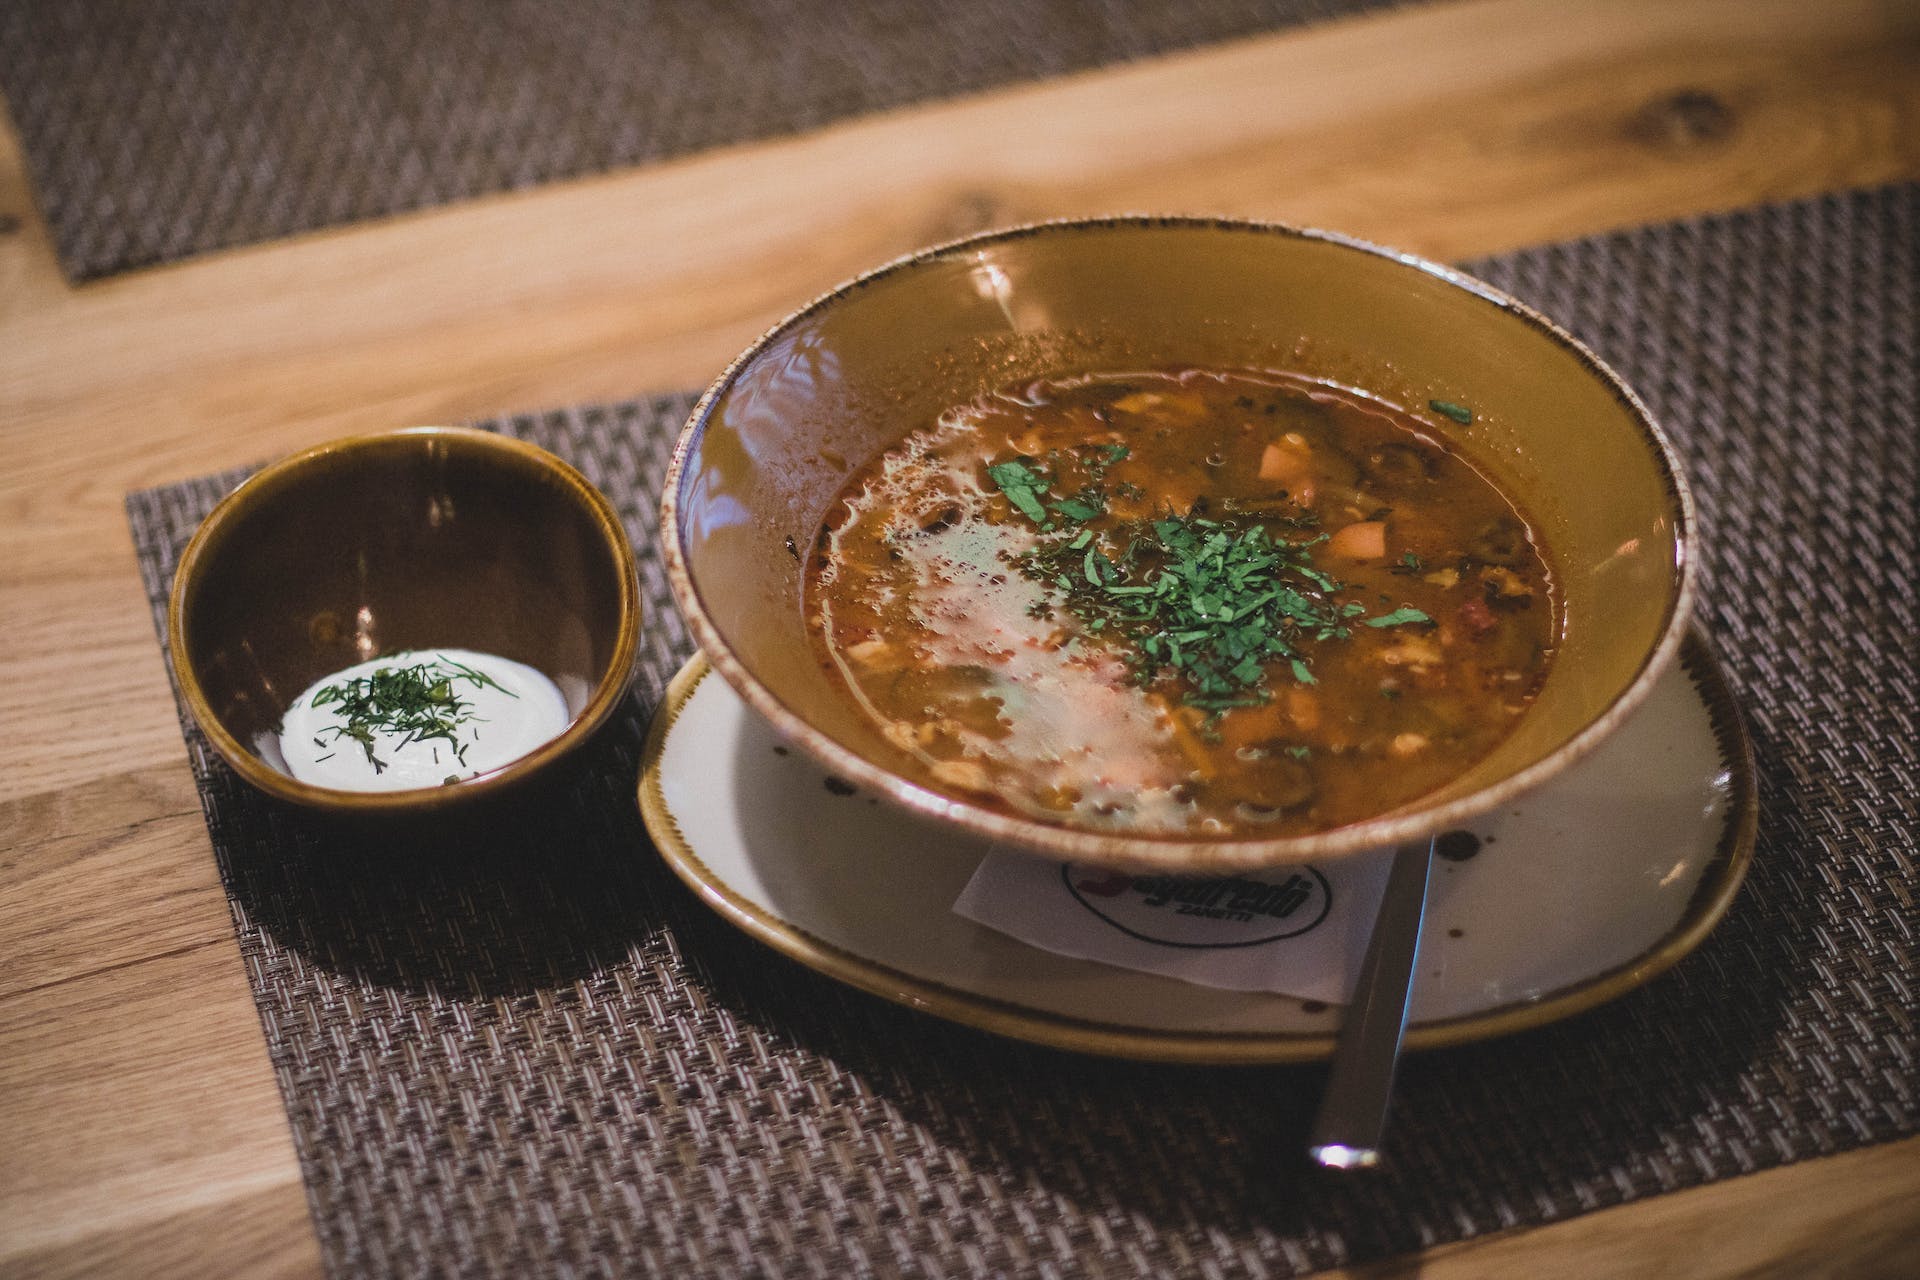 A bowl of soup | Source: Pexels